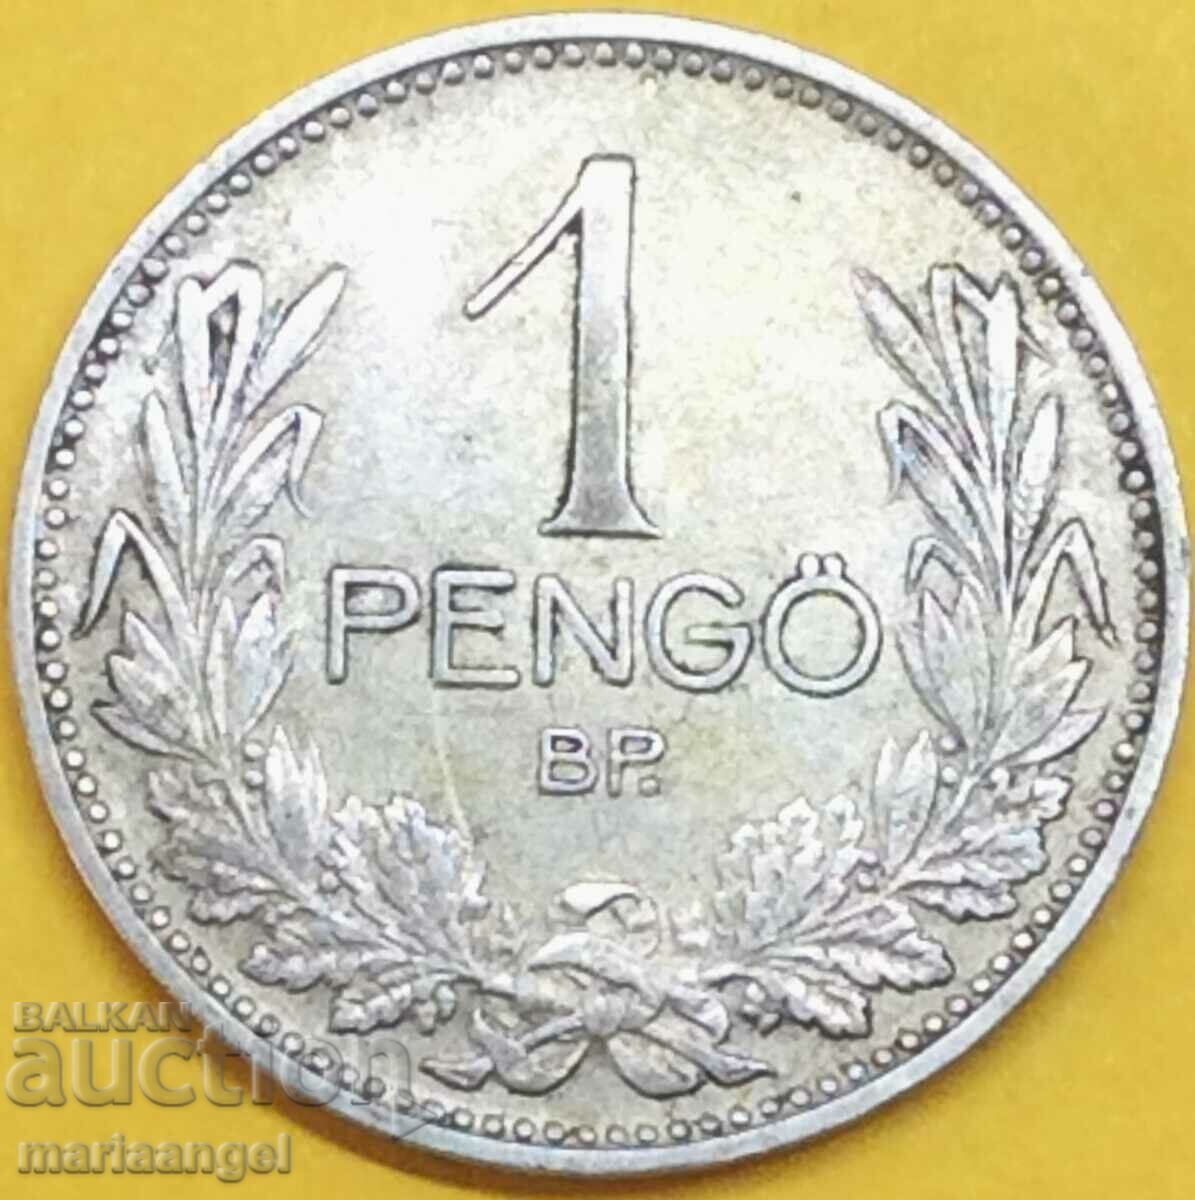 Hungary 1938 1 pengo silver